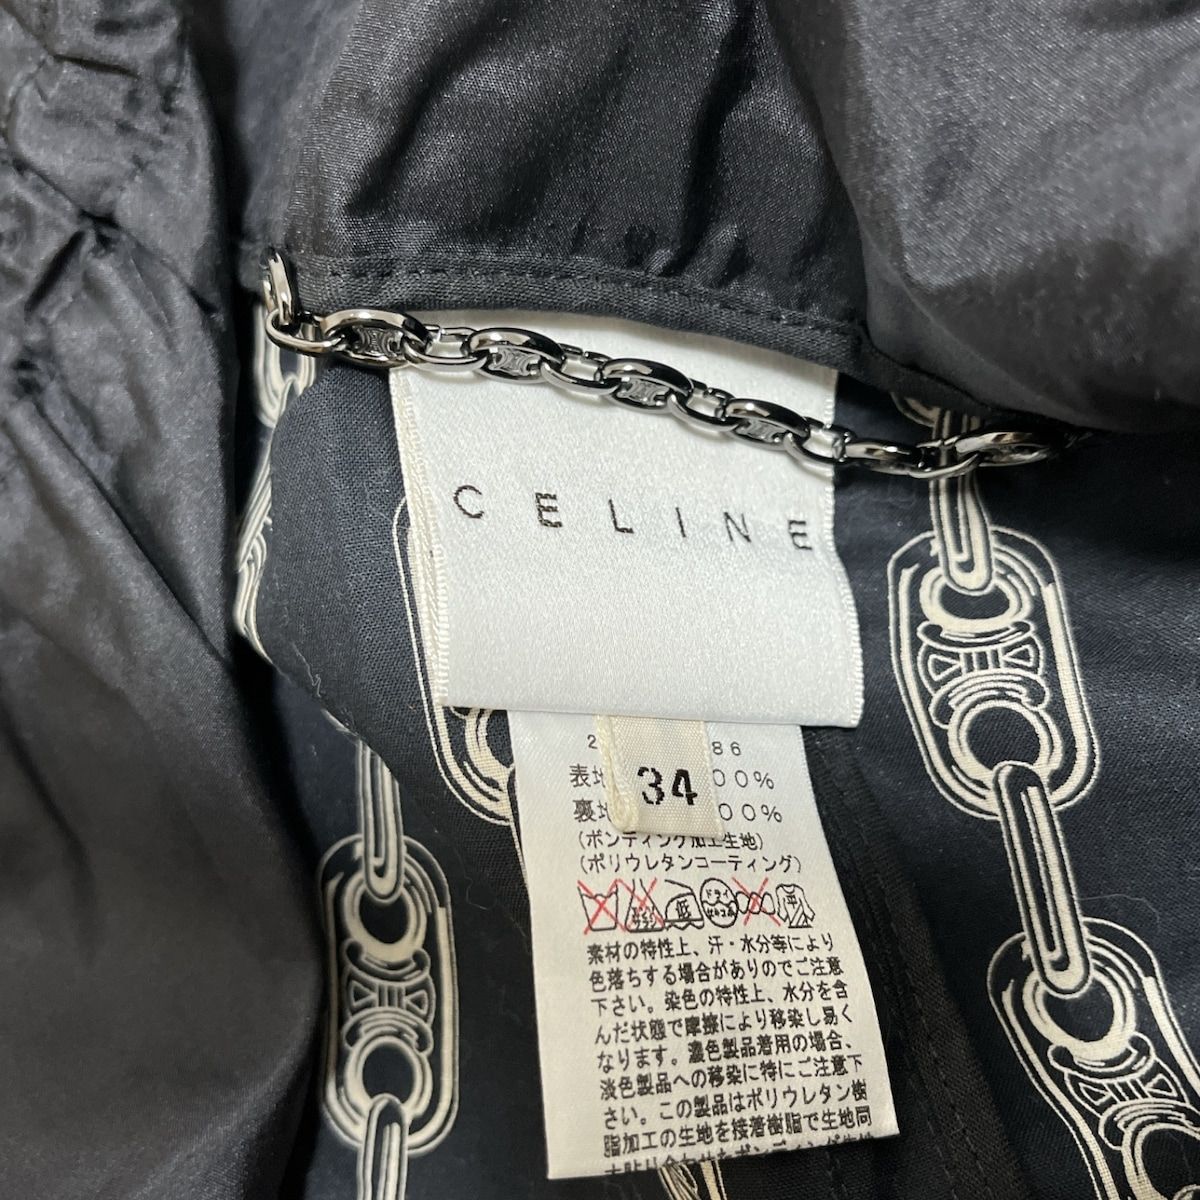 CELINE(セリーヌ) コート サイズ34 S レディース - 黒 長袖/春/秋 ...